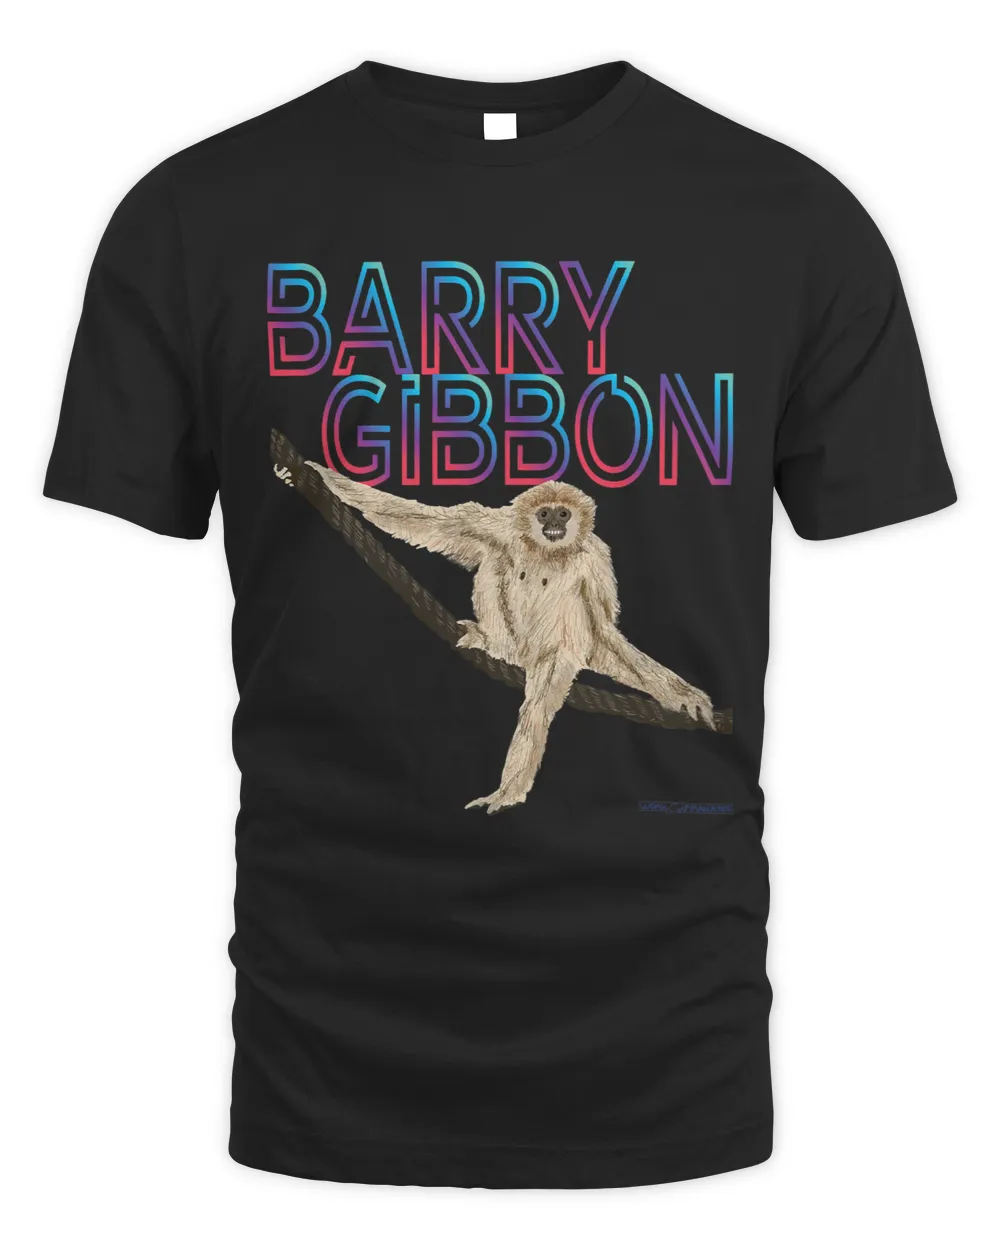 Barry Gibbon